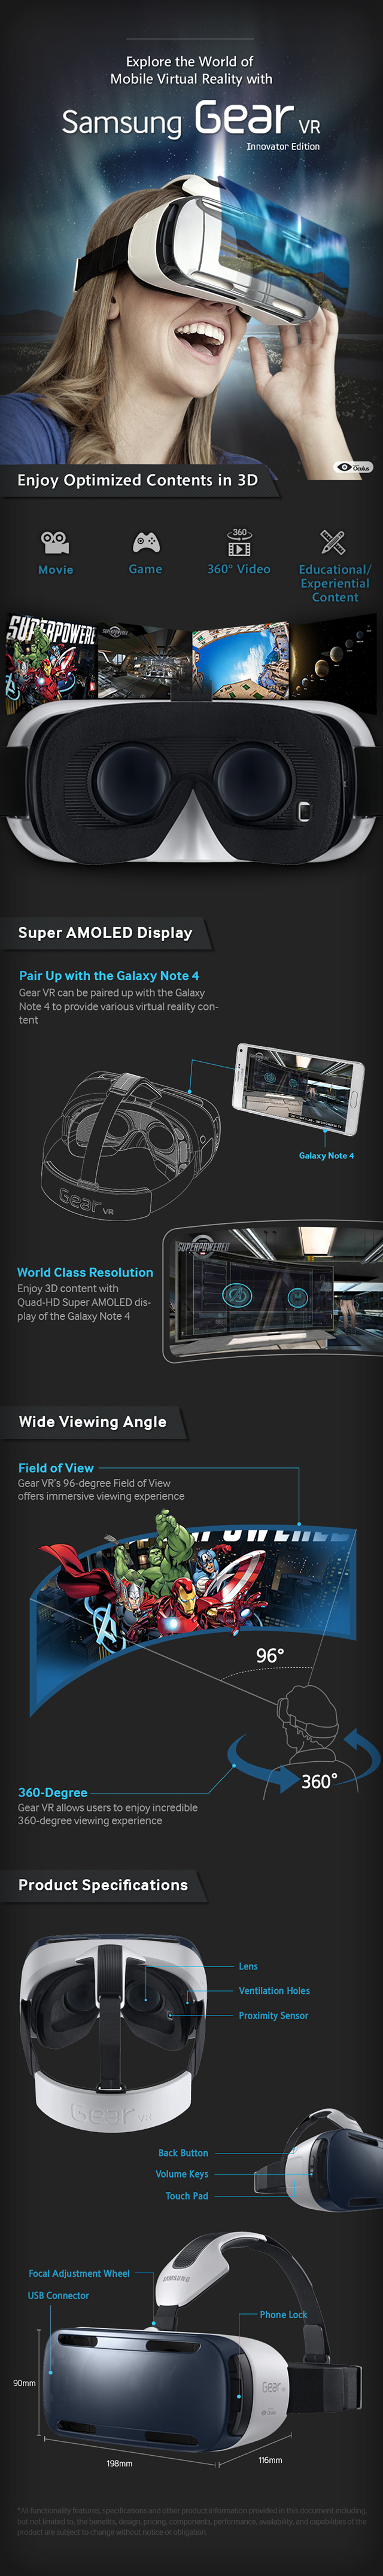 [Infographic] Samsung Gear VR Innovator Edition